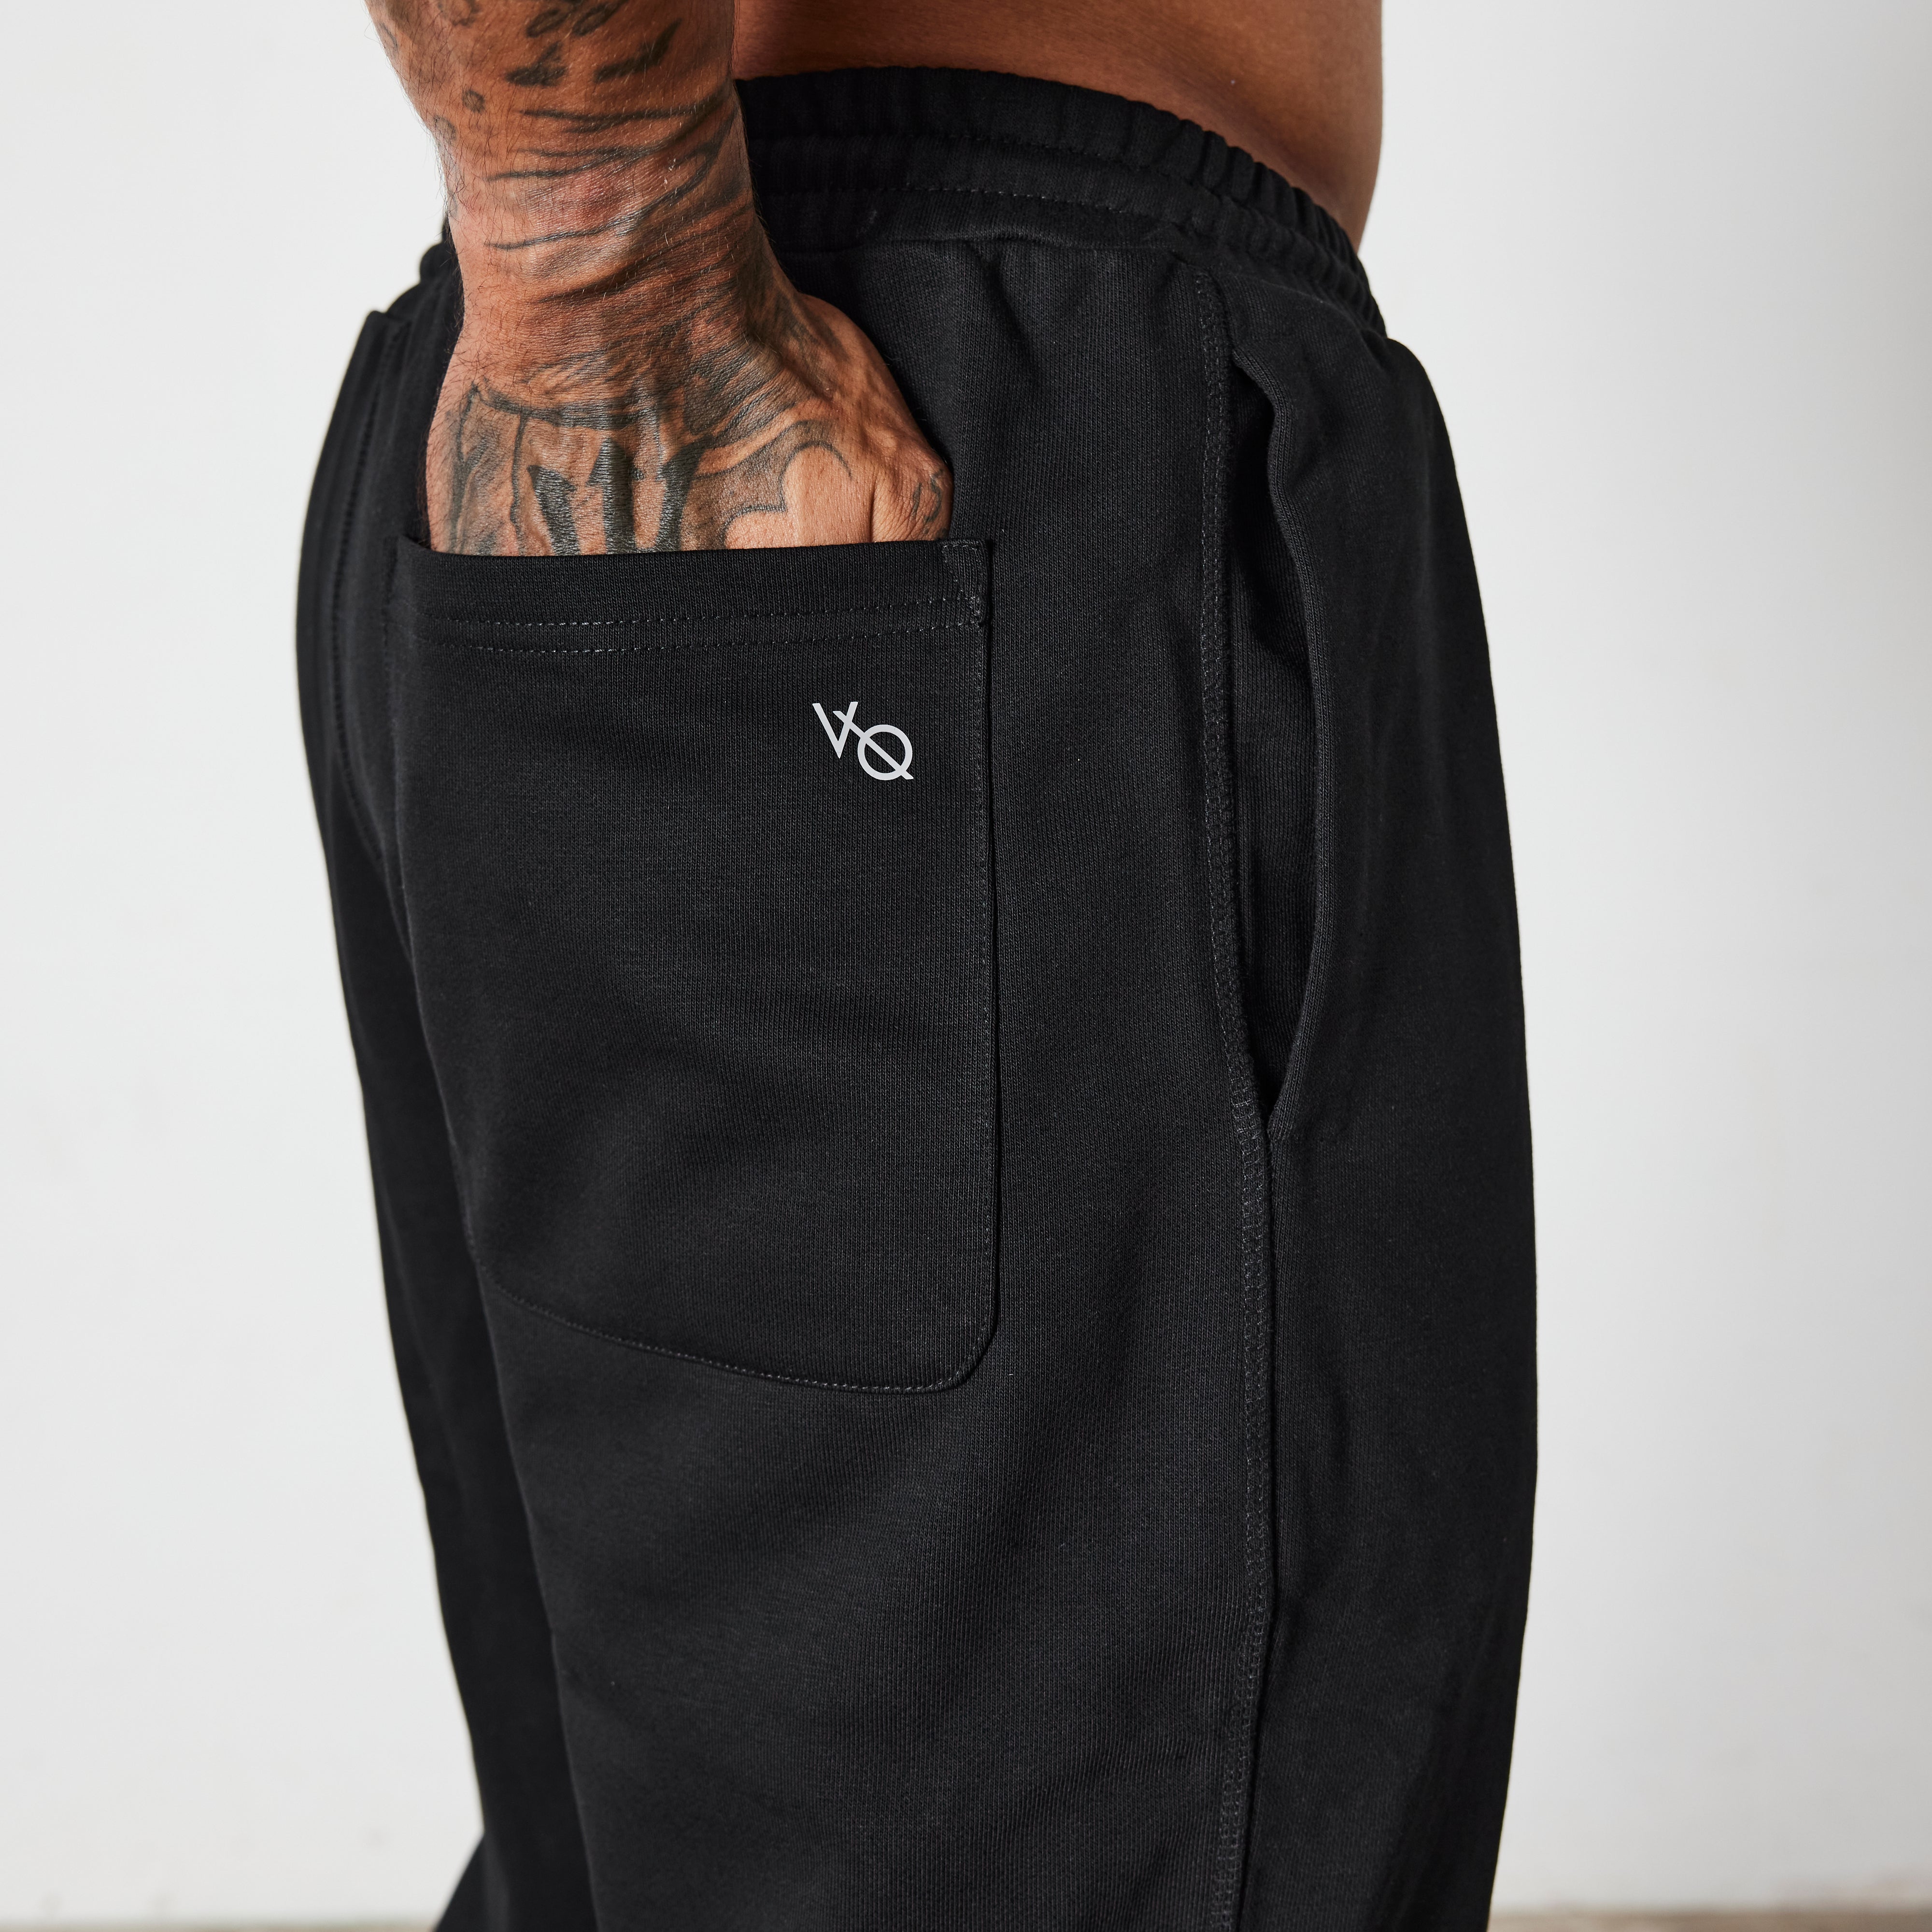 Vanquish Essential Black Oversized Sweatpants